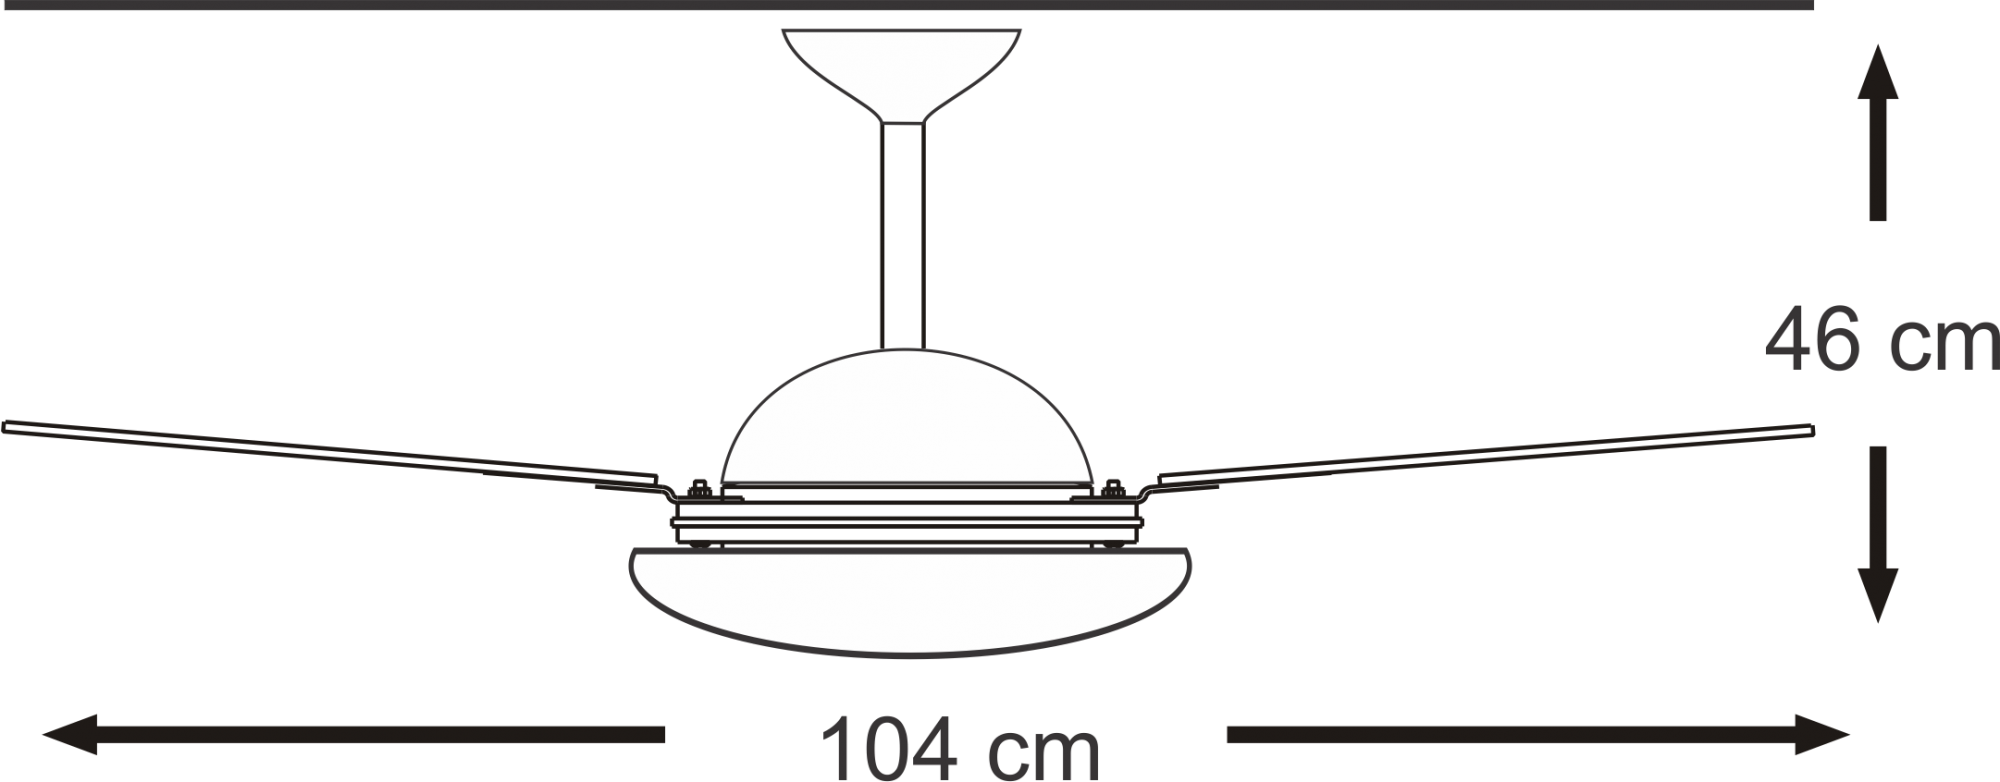 Ventilador de Teto Infinity Ultra Bandeira Preto 3 Pás Mdf Tabaco 110V 2005